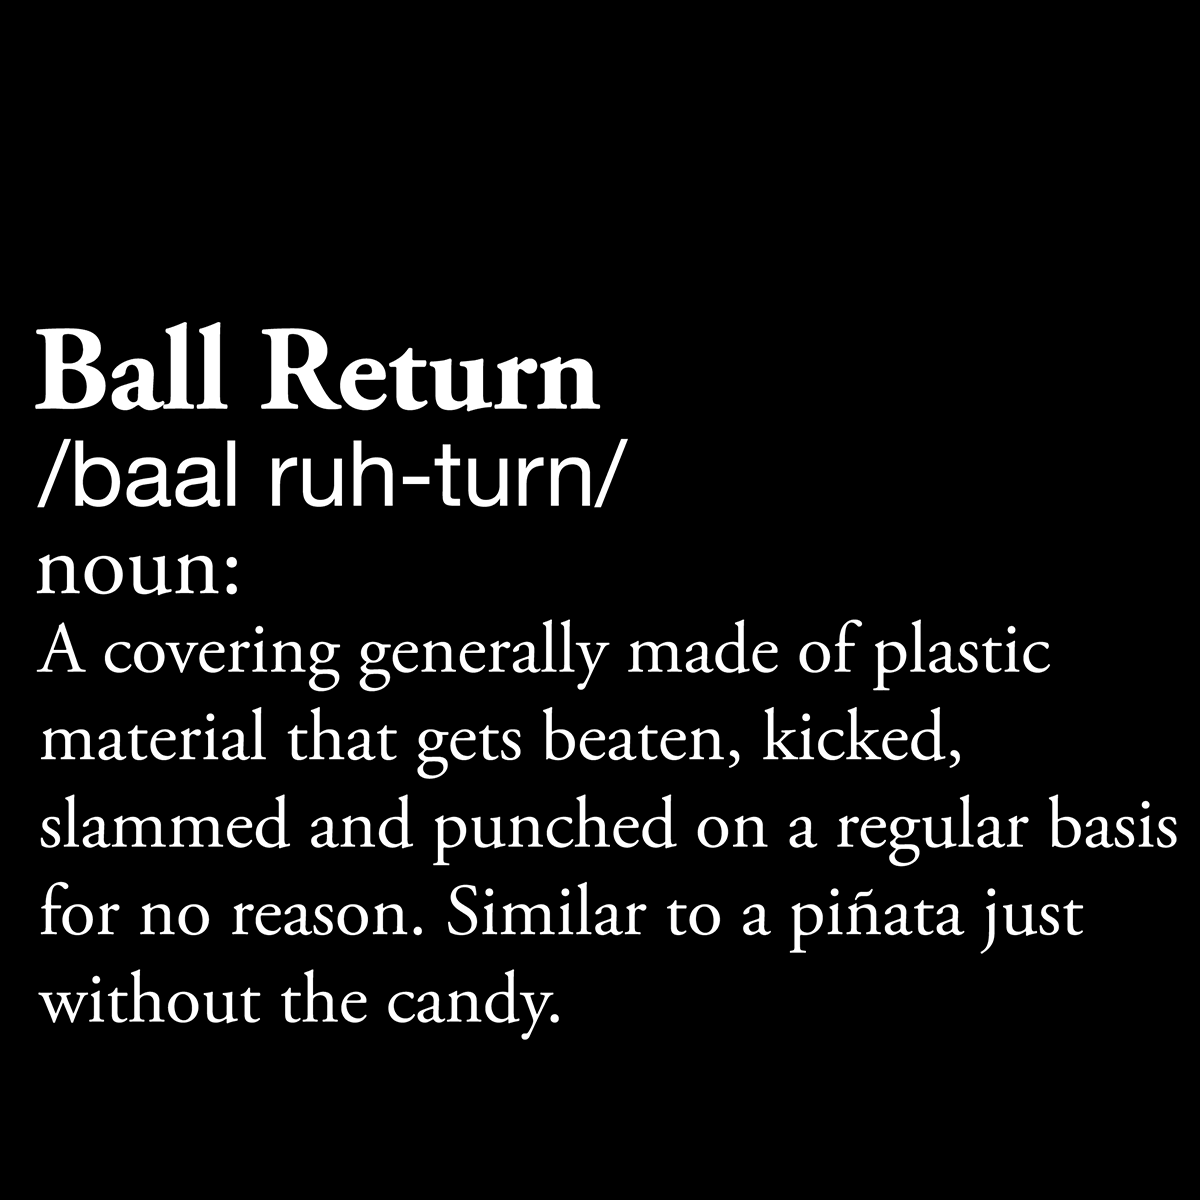 Ball Return